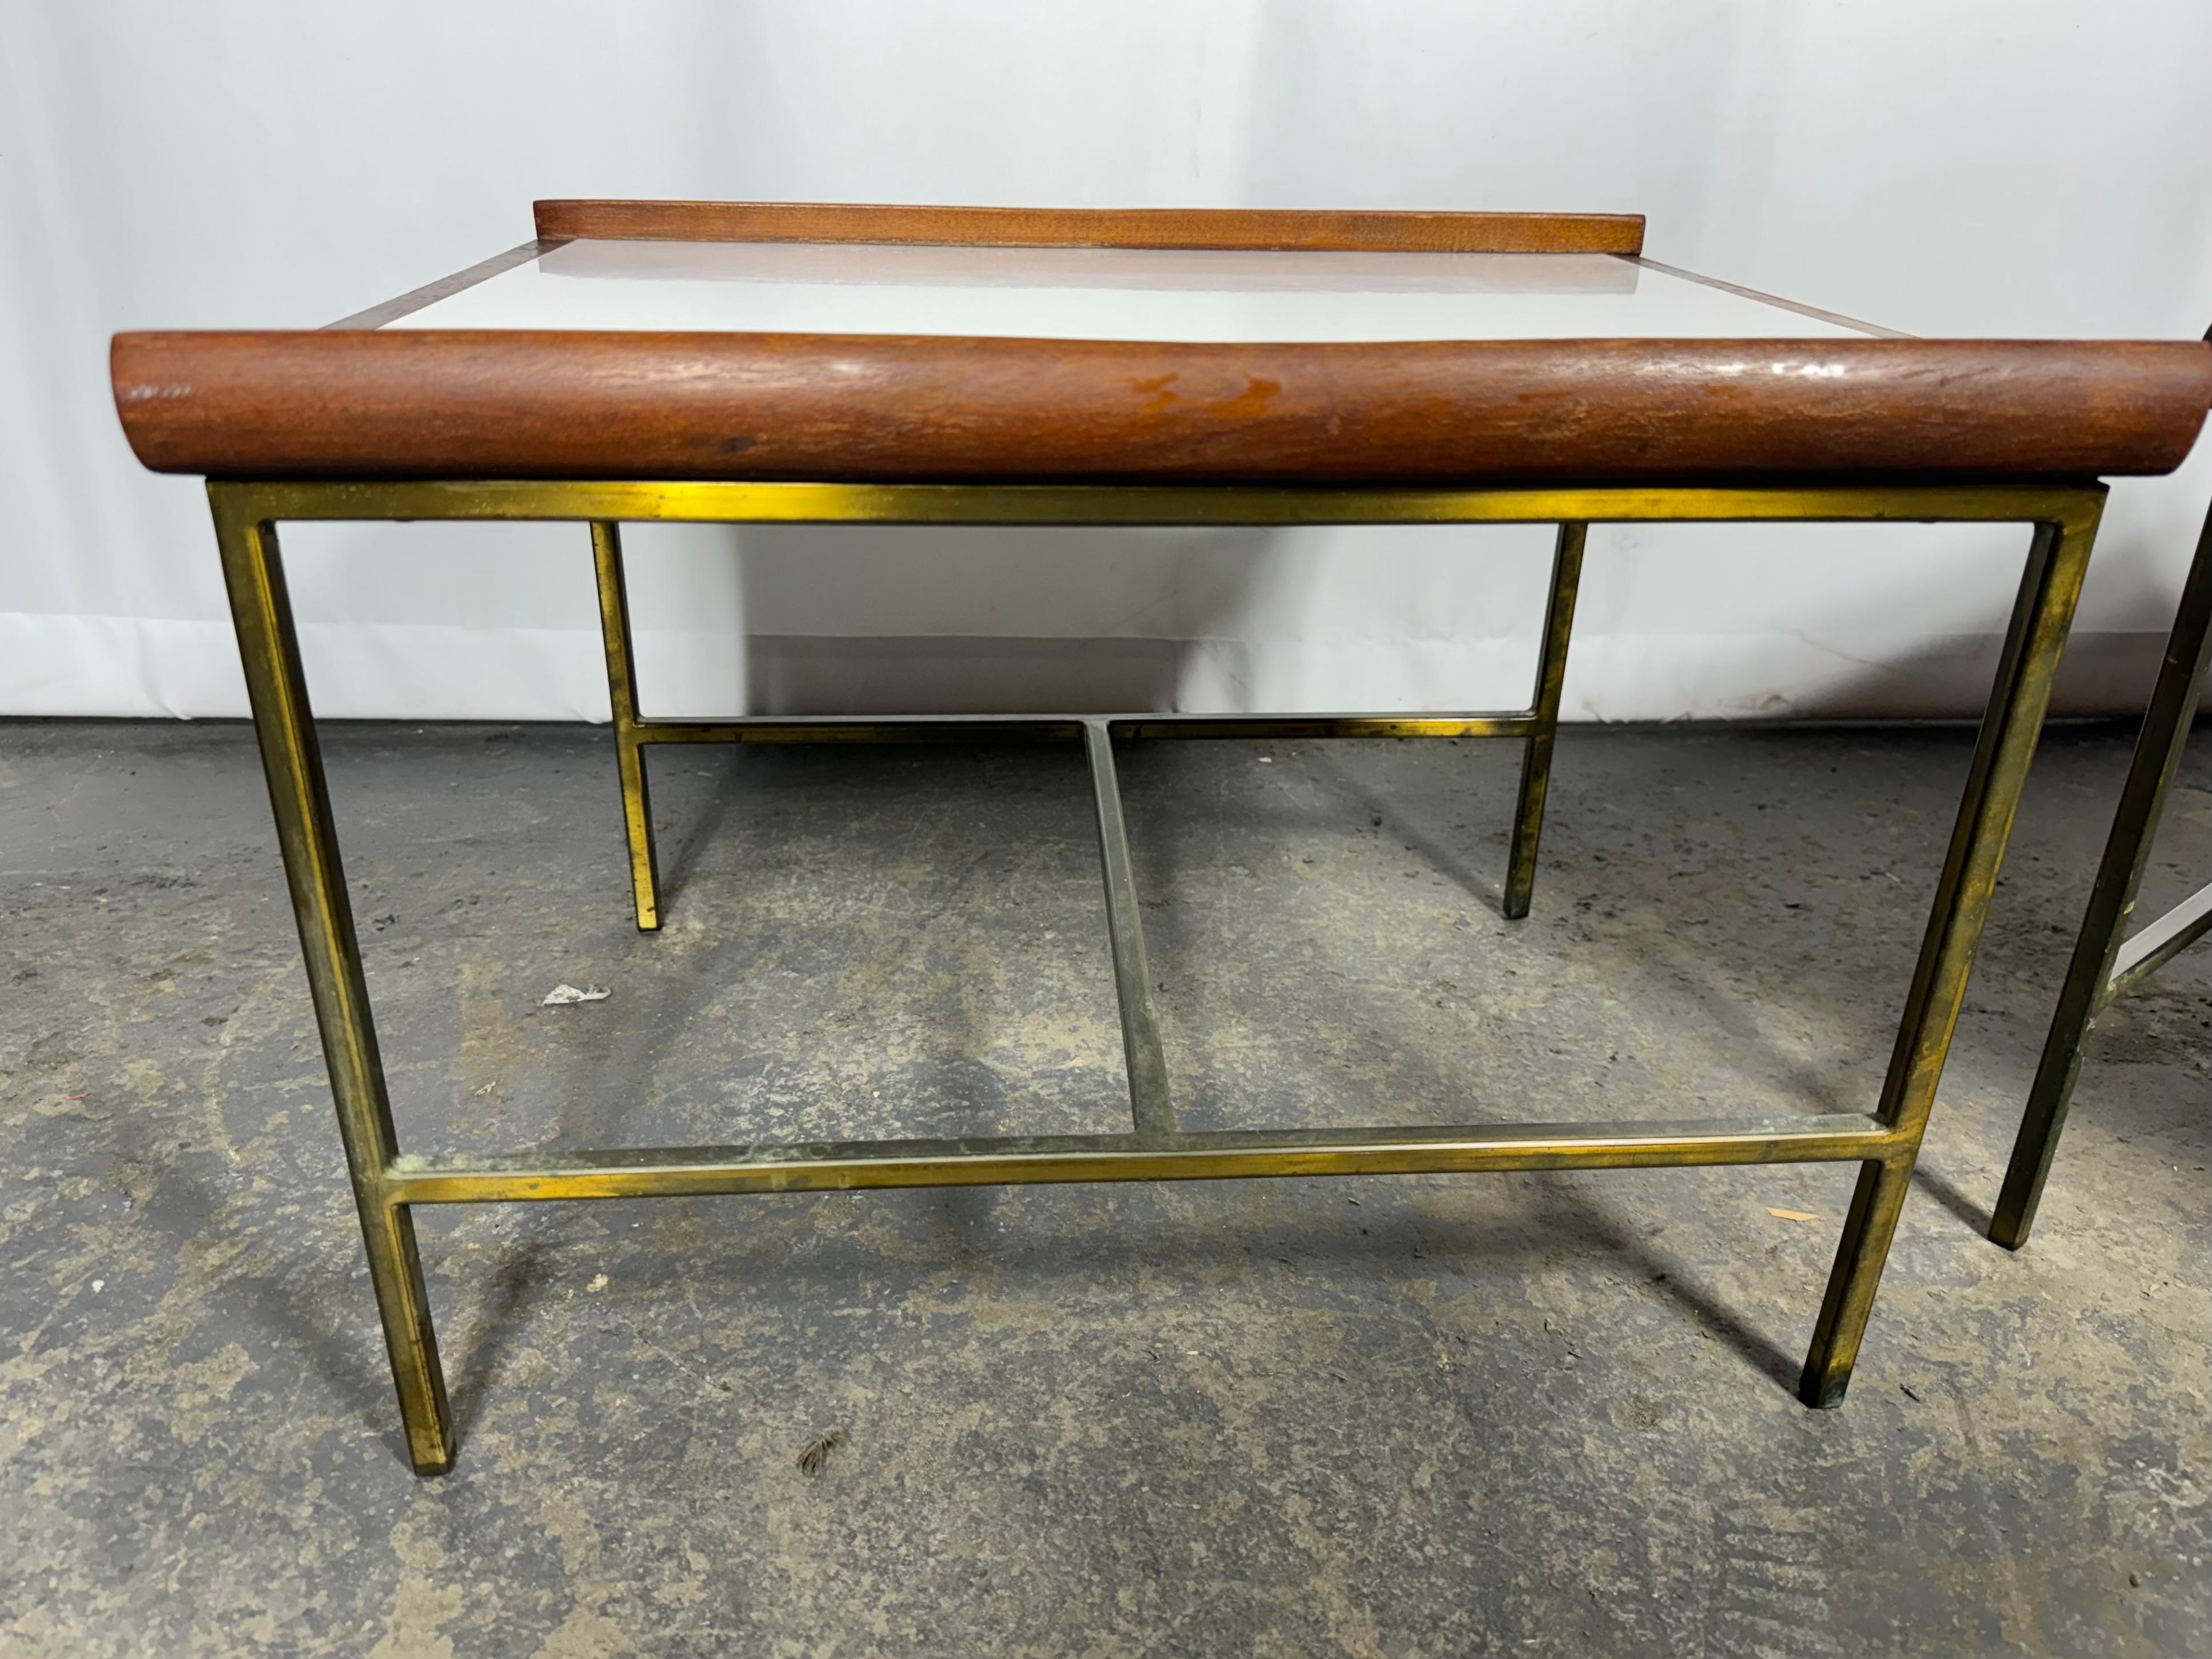 Pair Modernist Brass / Walnut / Laminet Tables attrib to Paul McCobb..Great design,, Retains original finish, heavy patina, aged,,minor wear to wood, minor sctatches to white laminate,, 